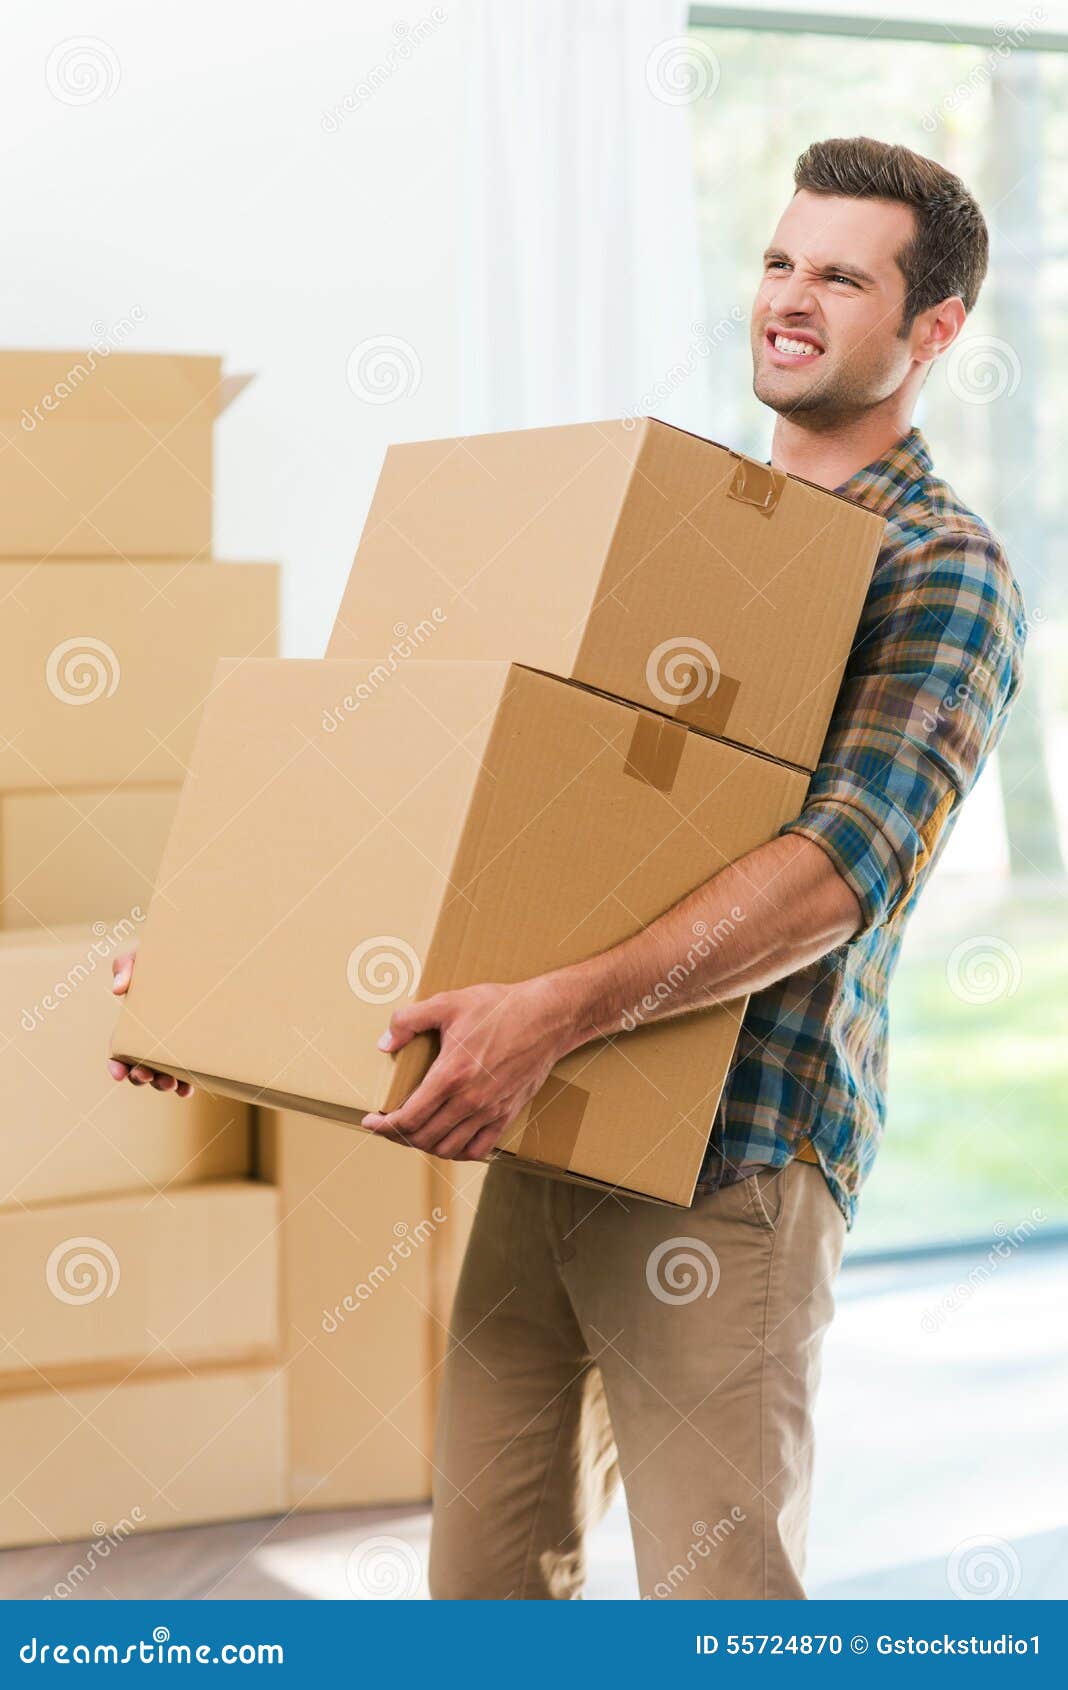 Человек держит тяжелый груз. Человек несет коробку. Тащит коробки. Несет тяжелые коробки. Человек несет тяжелый груз.